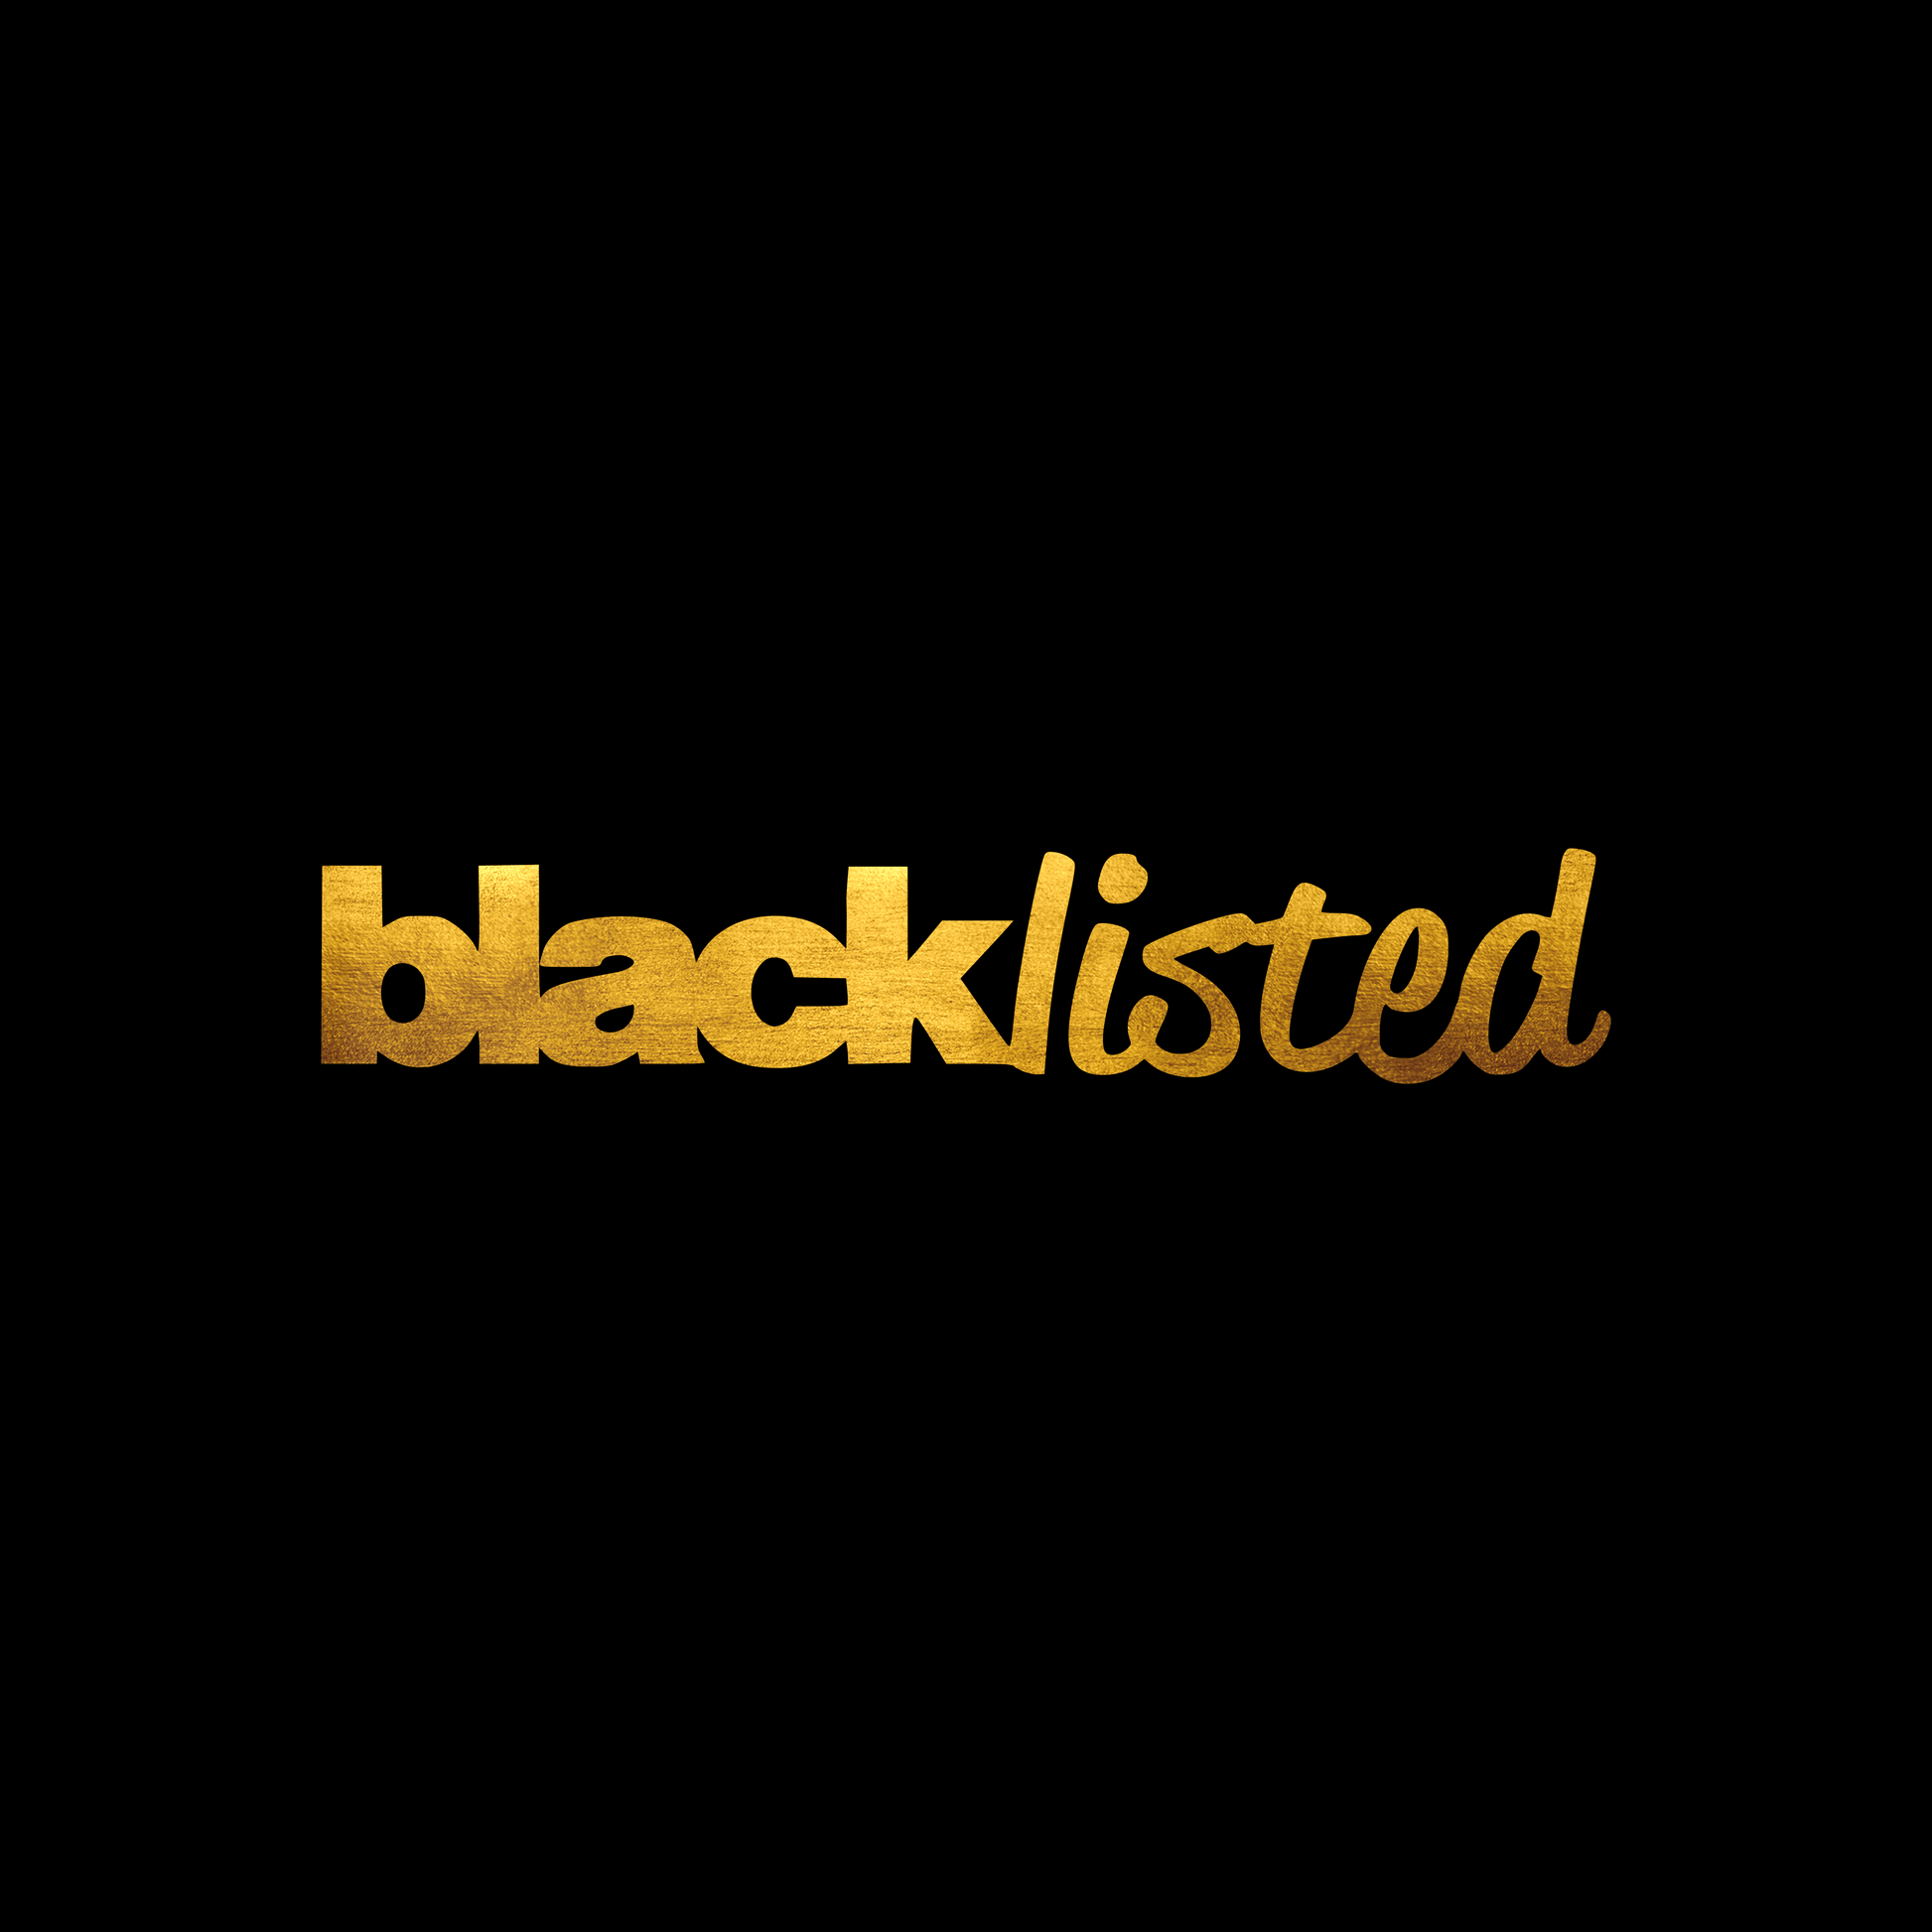 Blacklisted 2 sticker decal